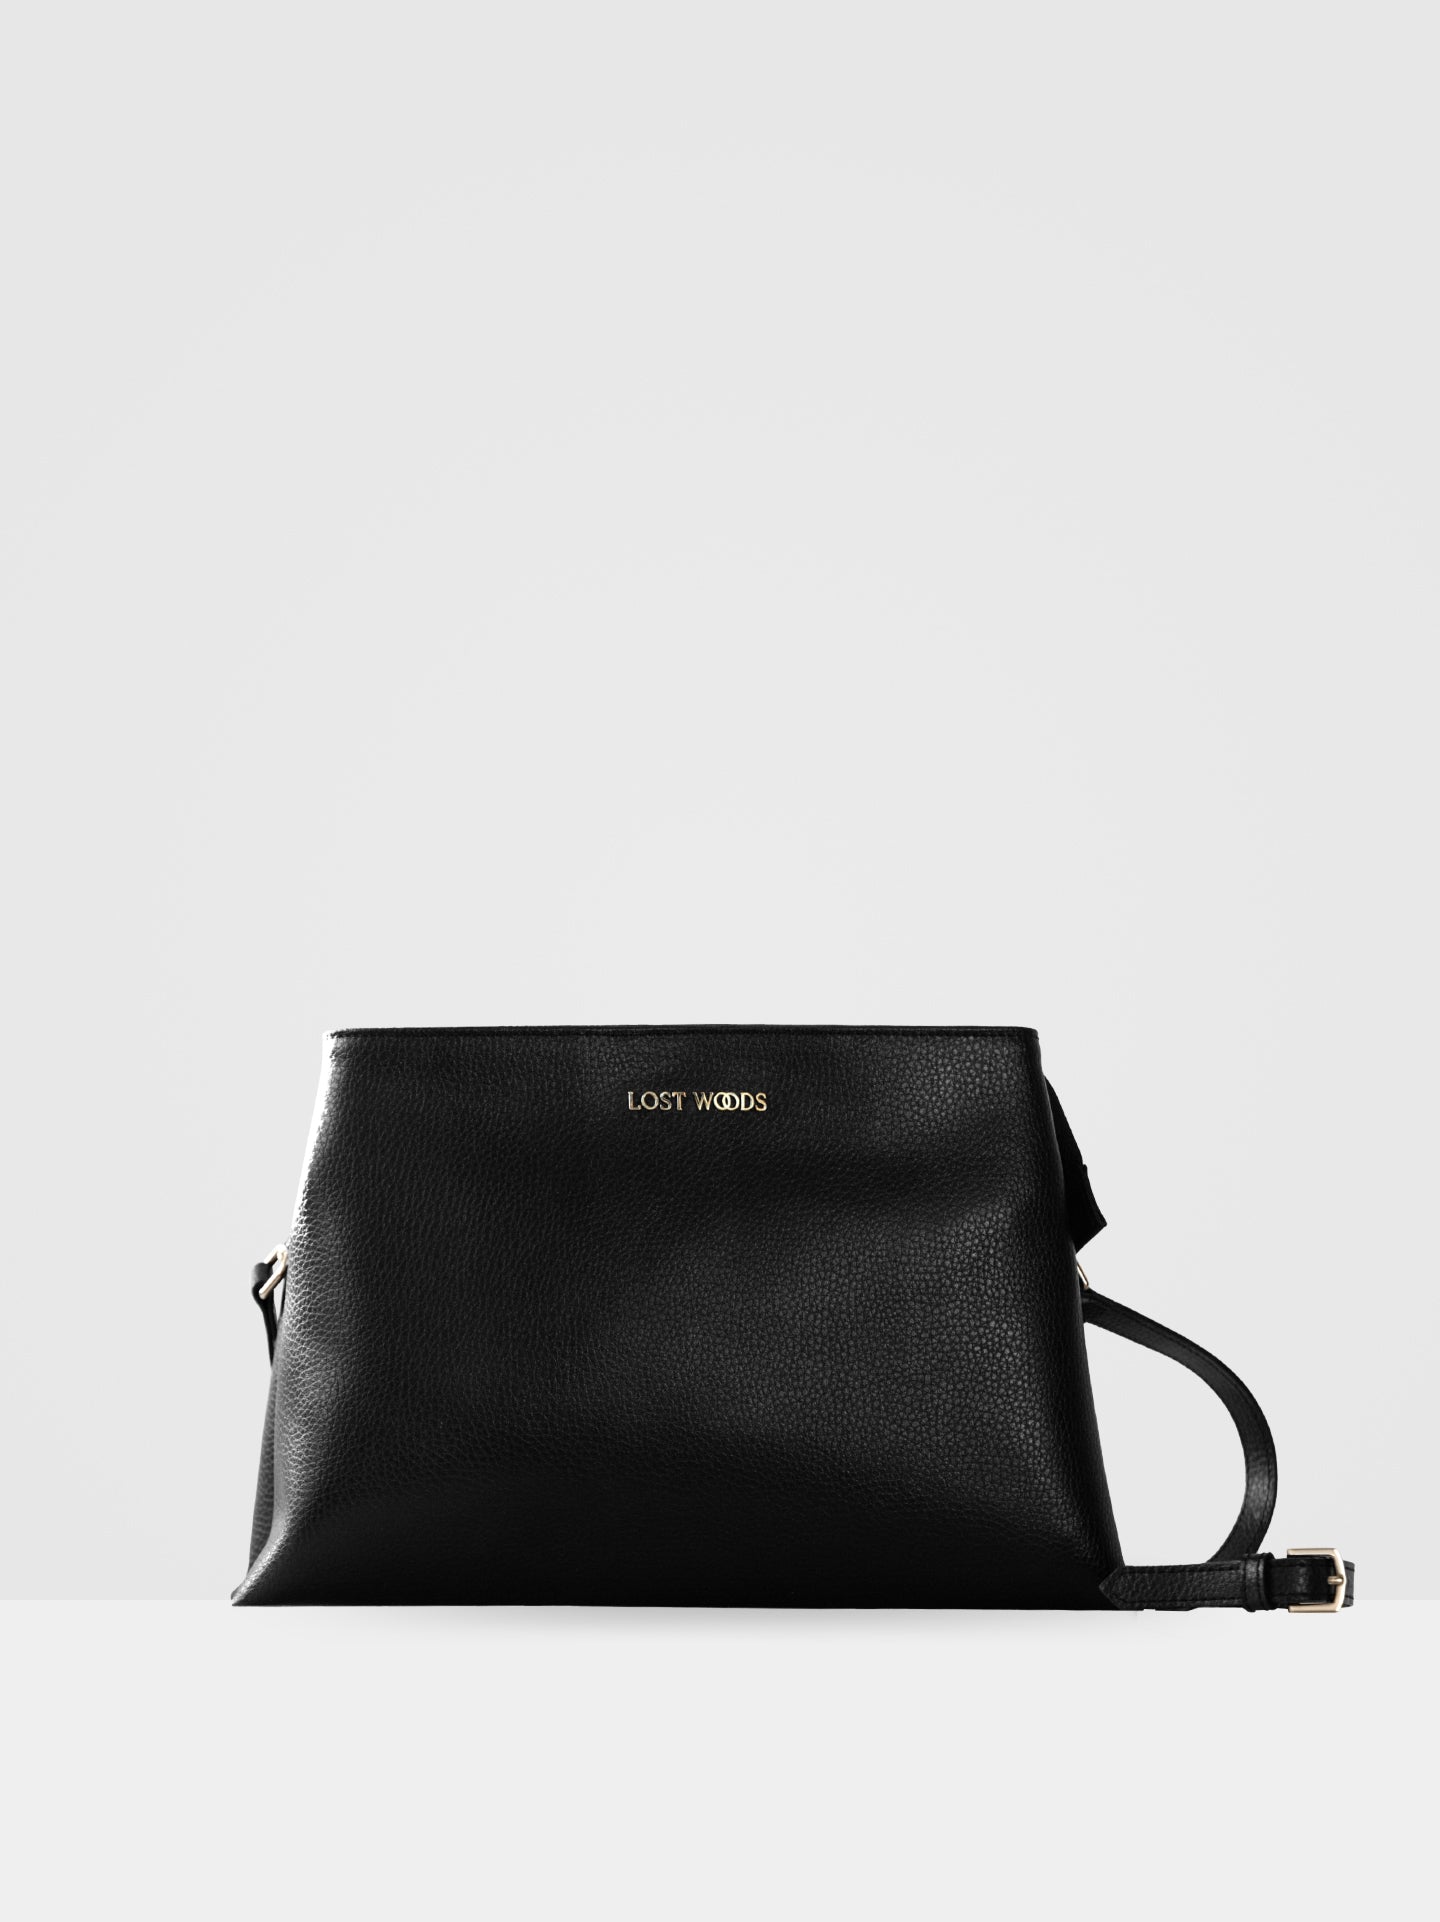 Buy Viva Terry Vegan Leather Crossbody Fashion Shoulder Bag Purse with  Adjustable Strap, Black, Medium at Amazon.in